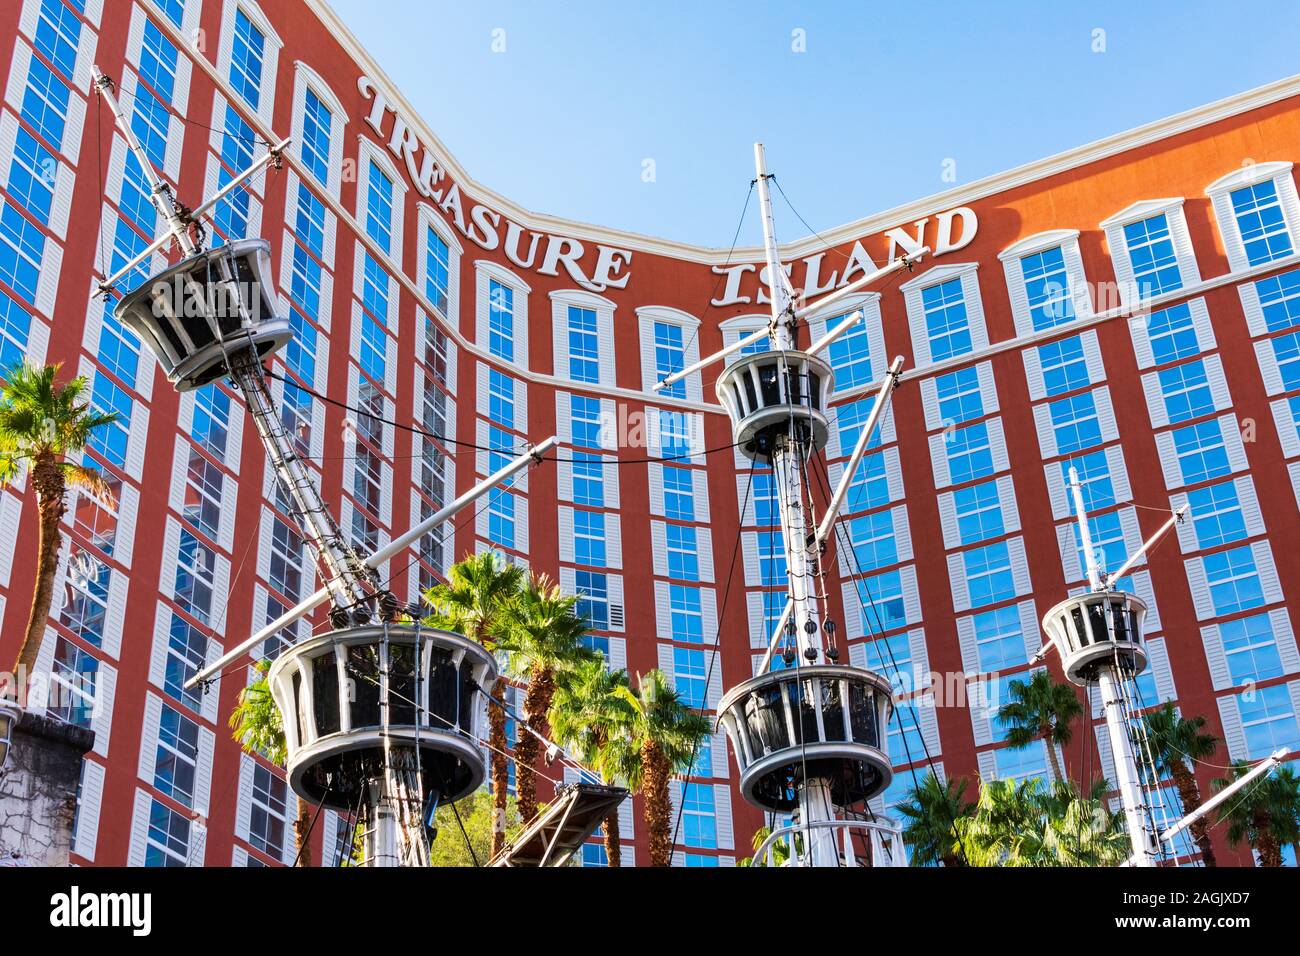 Pirate ship mast at Treasure Island hotel and casino as seen from Las Vegas Strip - Las Vegas, Nevada, USA - December, 2019 Stock Photo